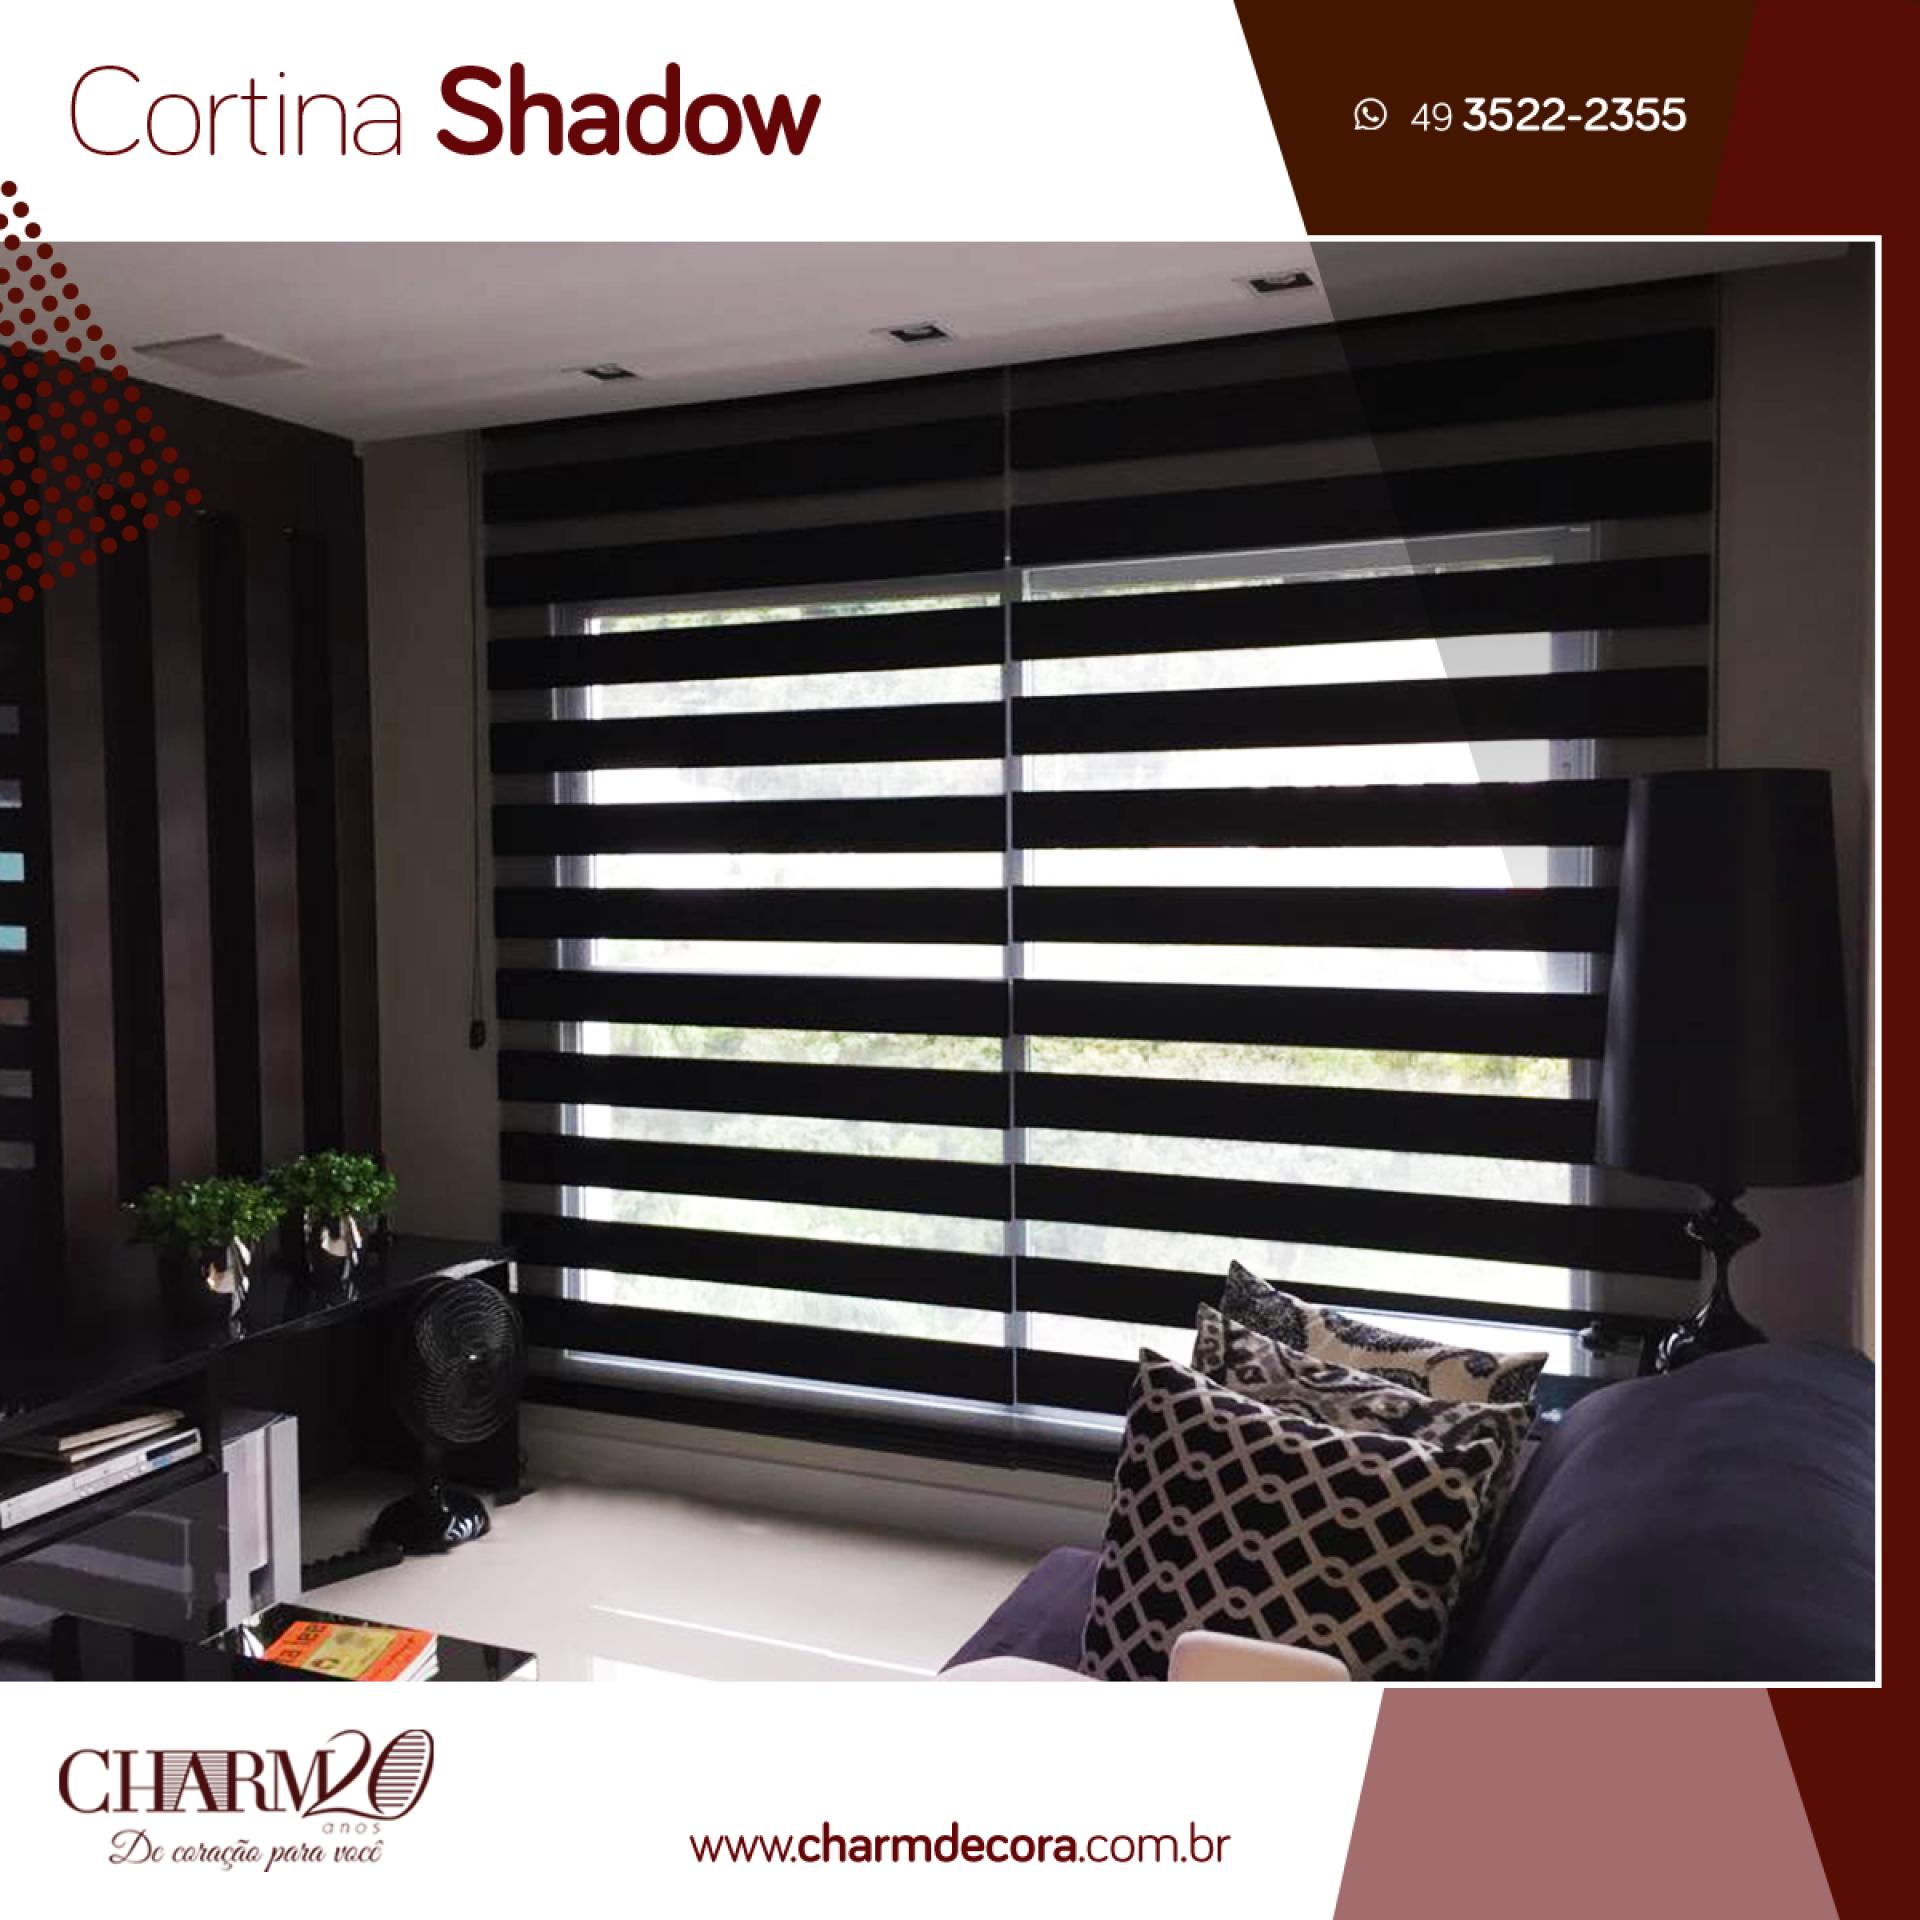 Cortina Shadow